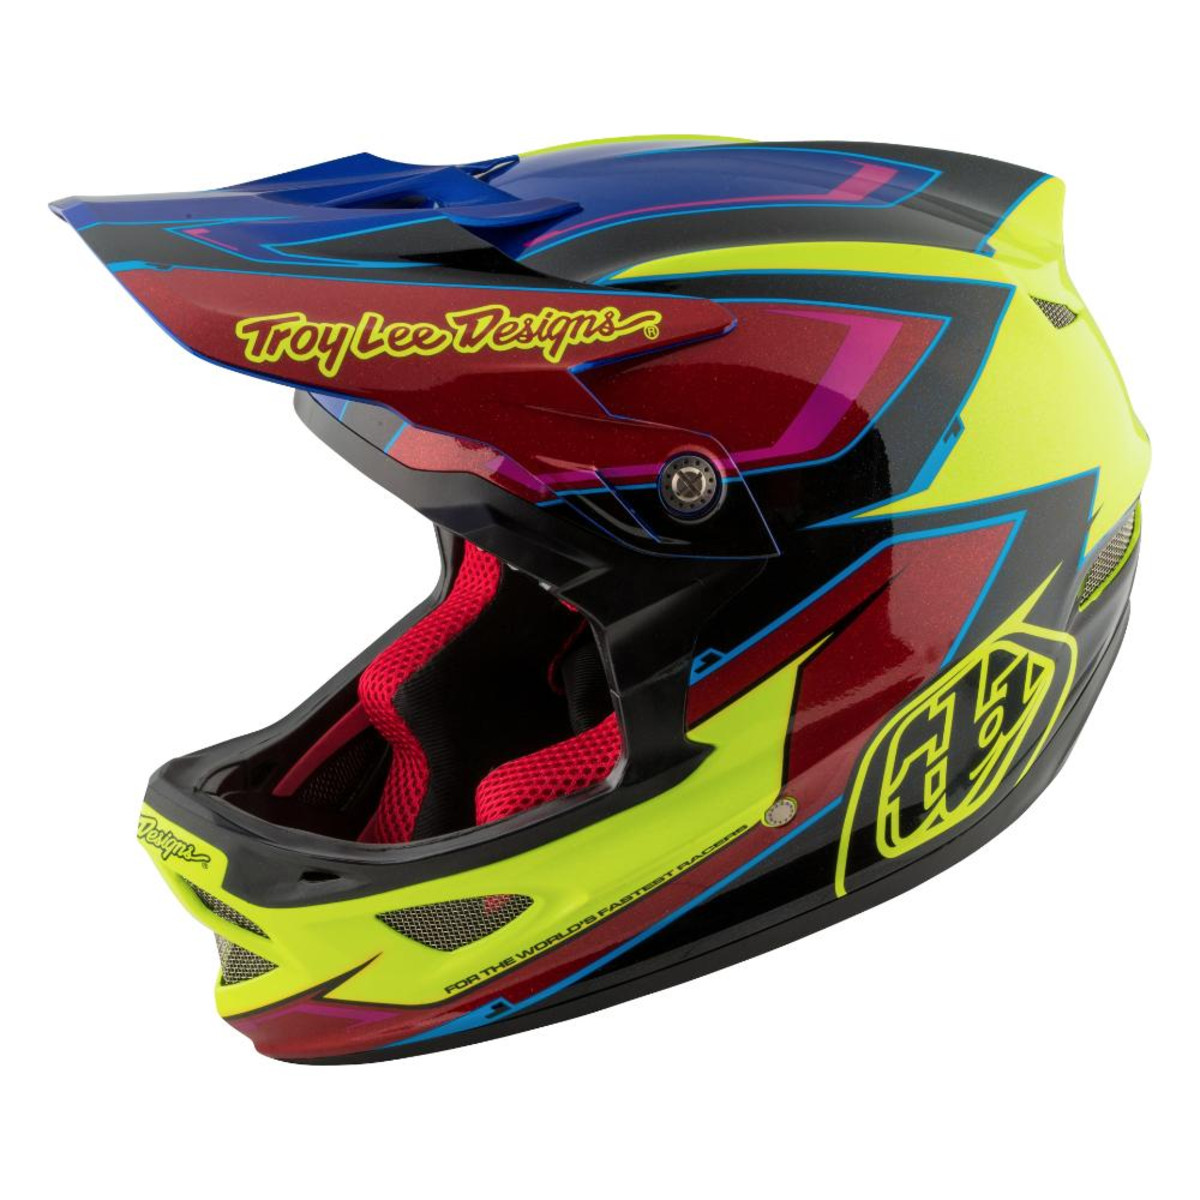 Troy Lee Designs Downhill-MTB Helmet D3 Cadence - Yellow/Red